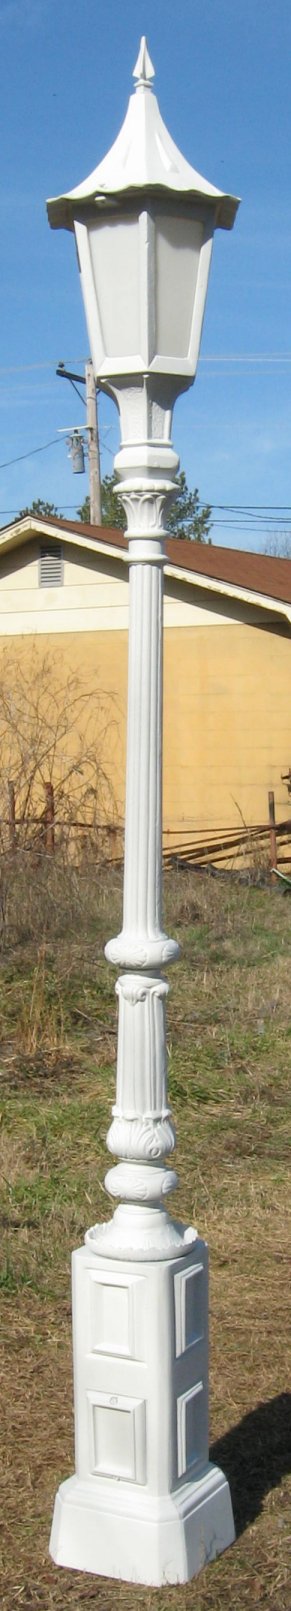 cast aluminum balboa lamp post with tudor top